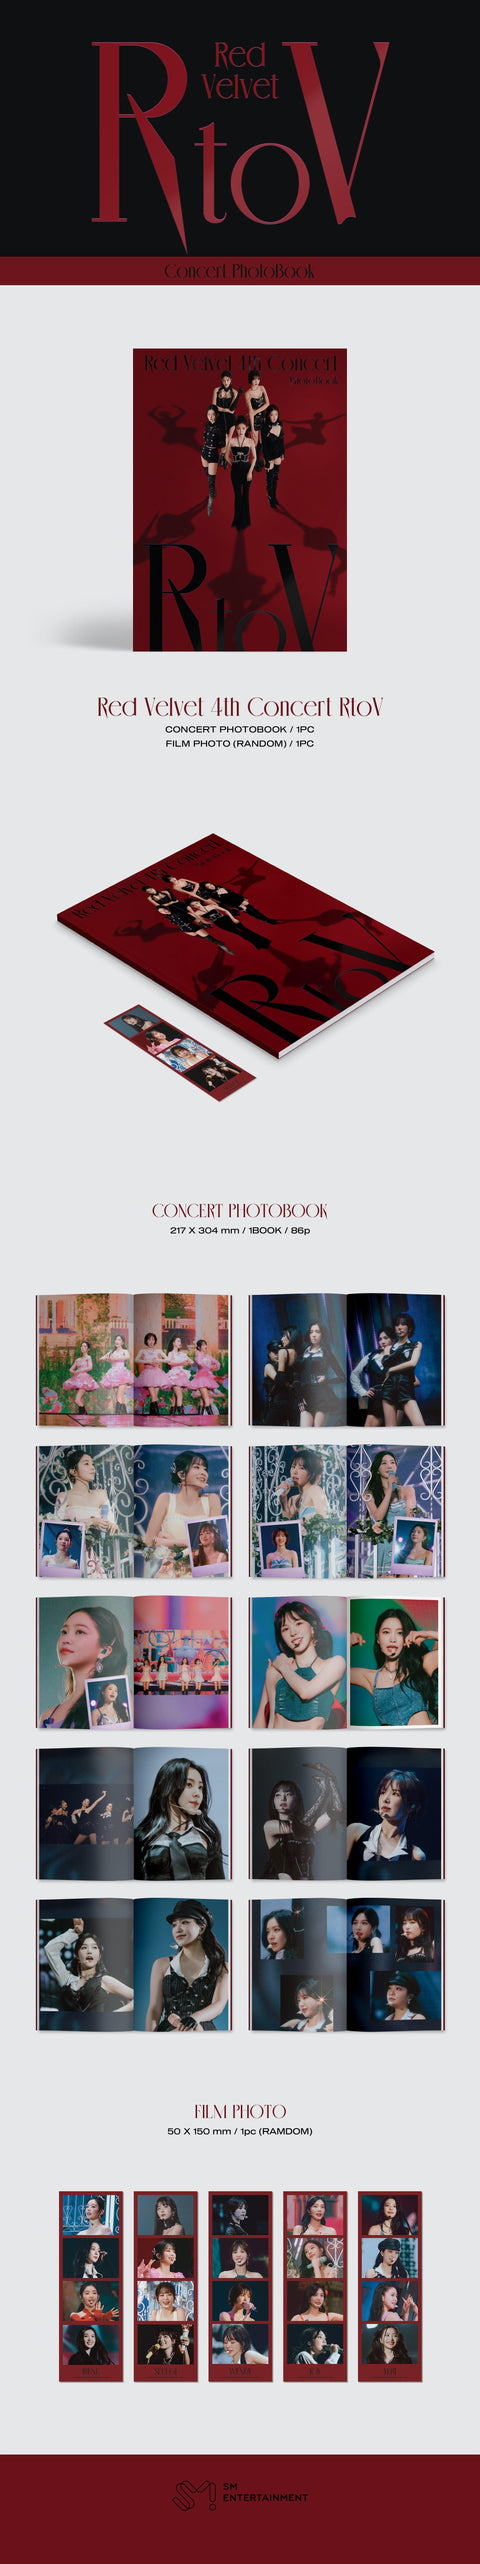 Red Velvet 4th Concert : R to V CONCERT PHOTOBOOK - Pig Rabbit Shop Kpop store Spain